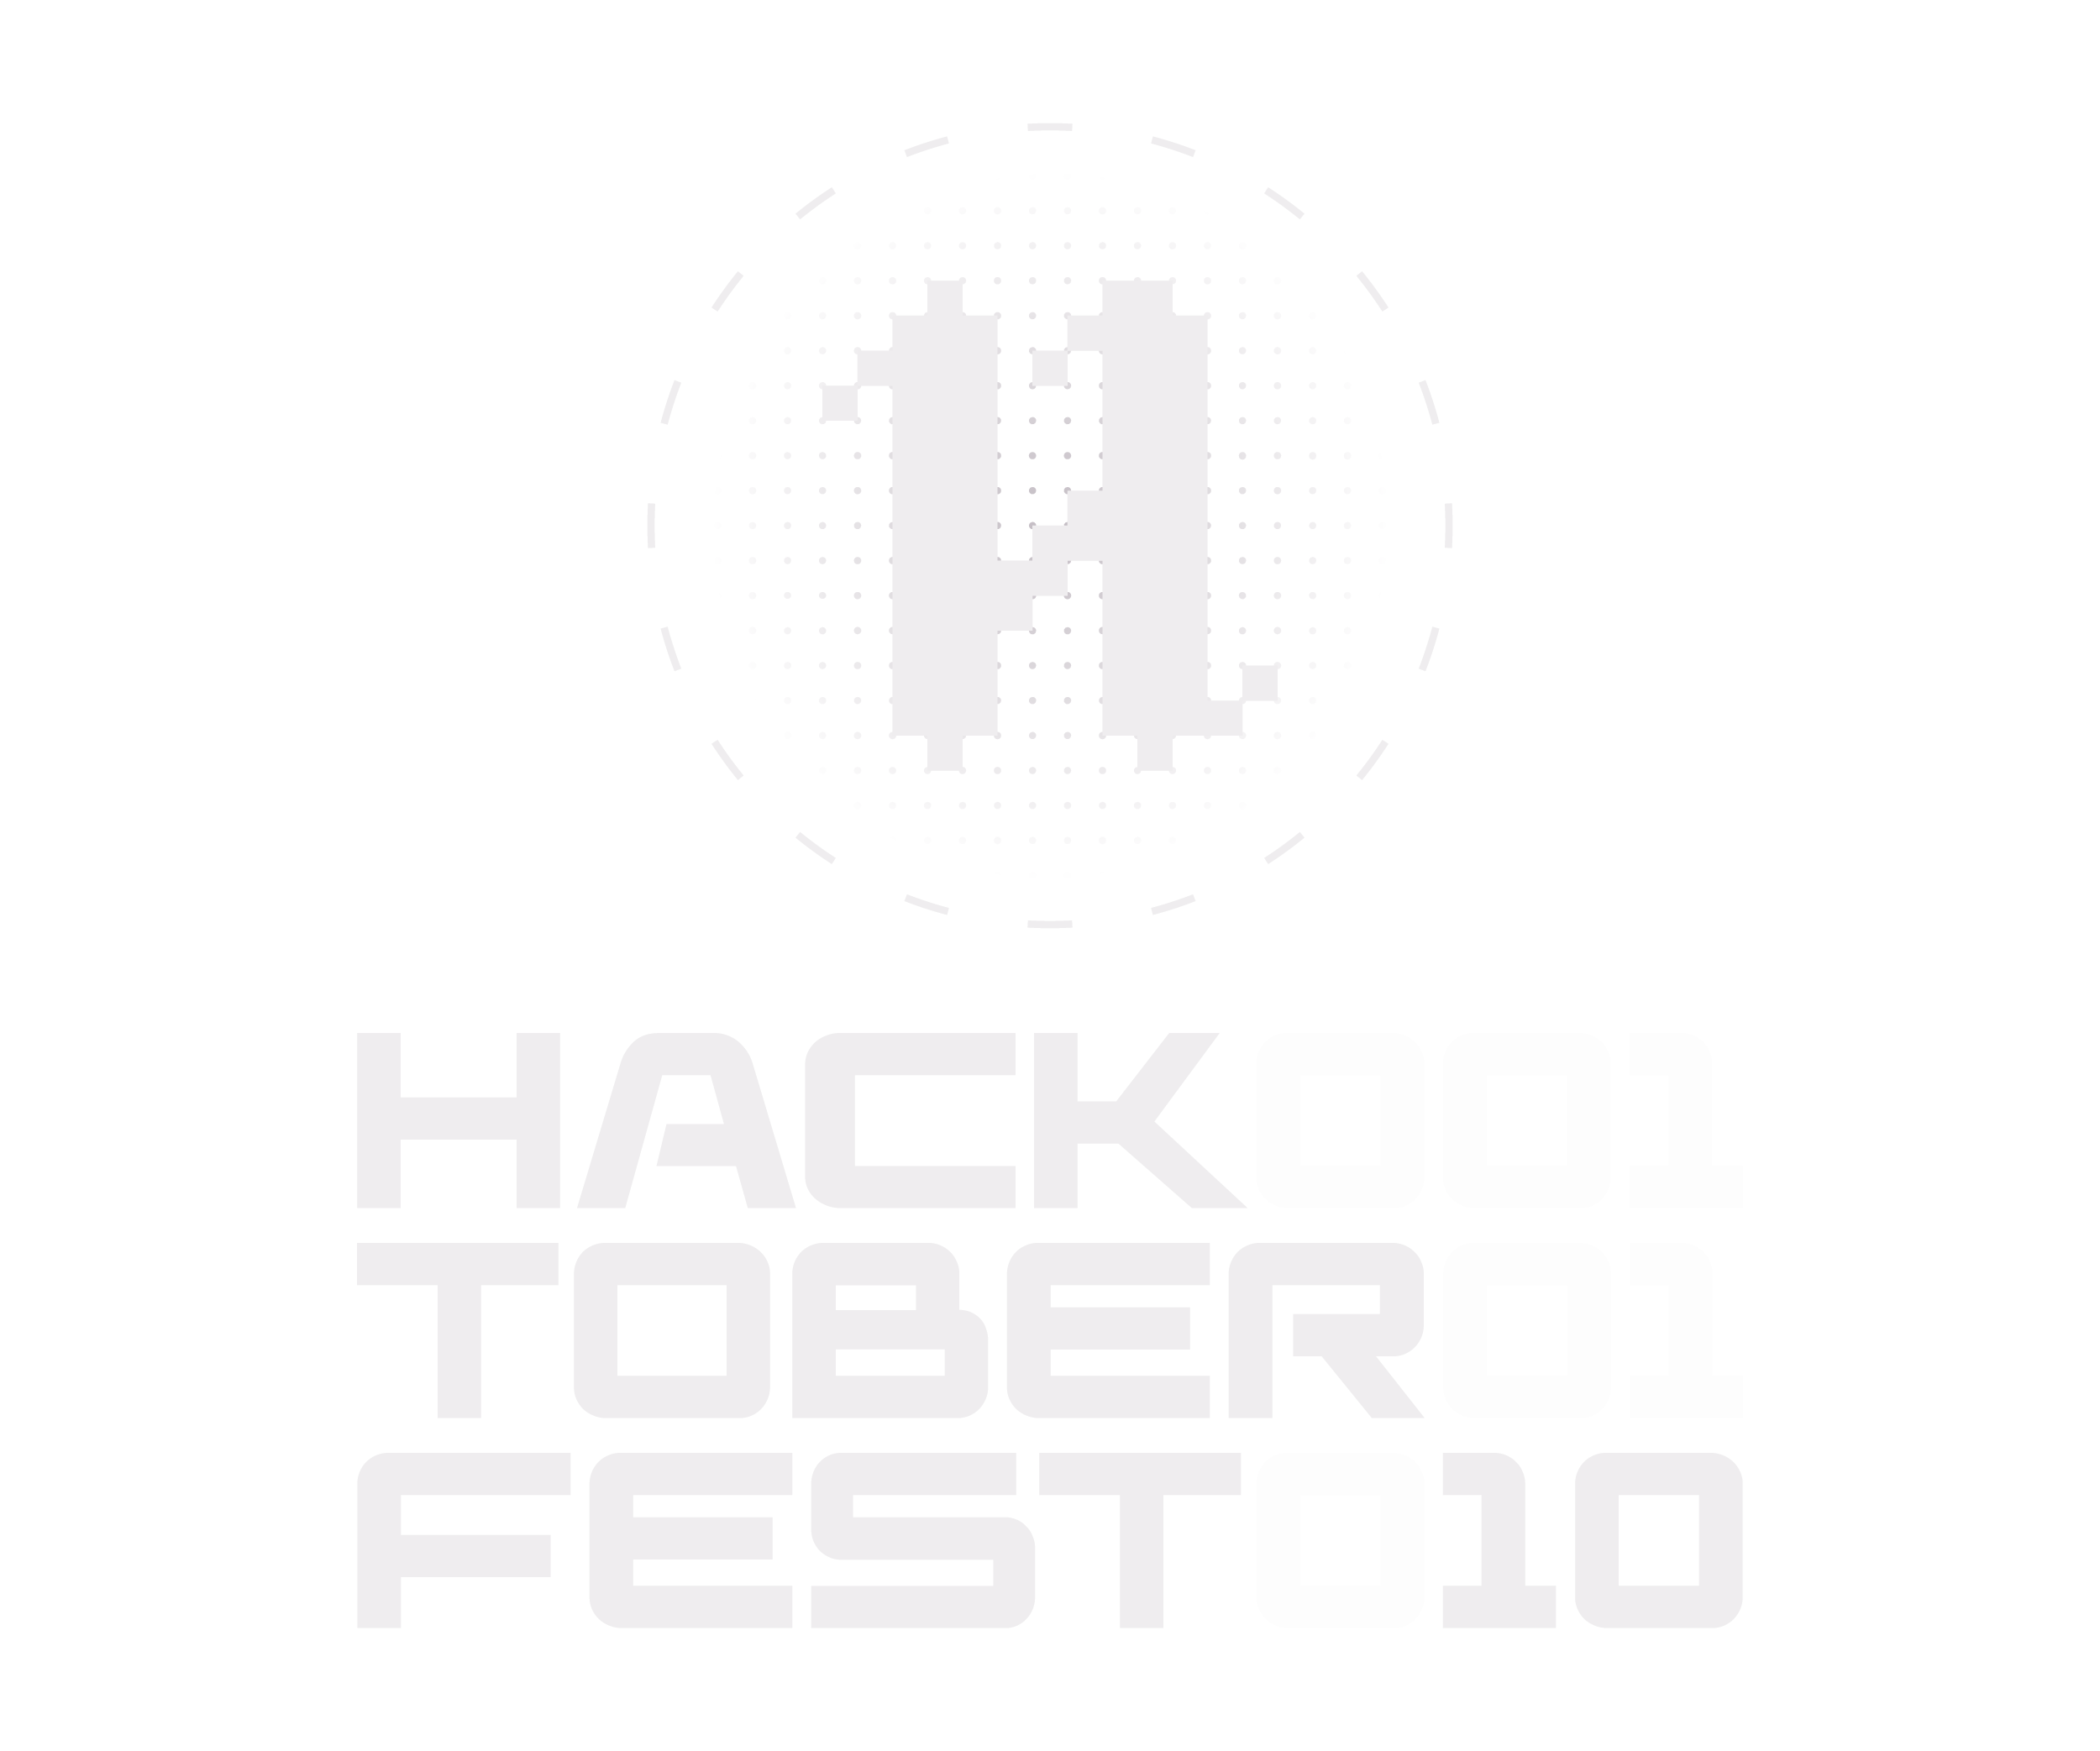 Hacktoberfest's logo